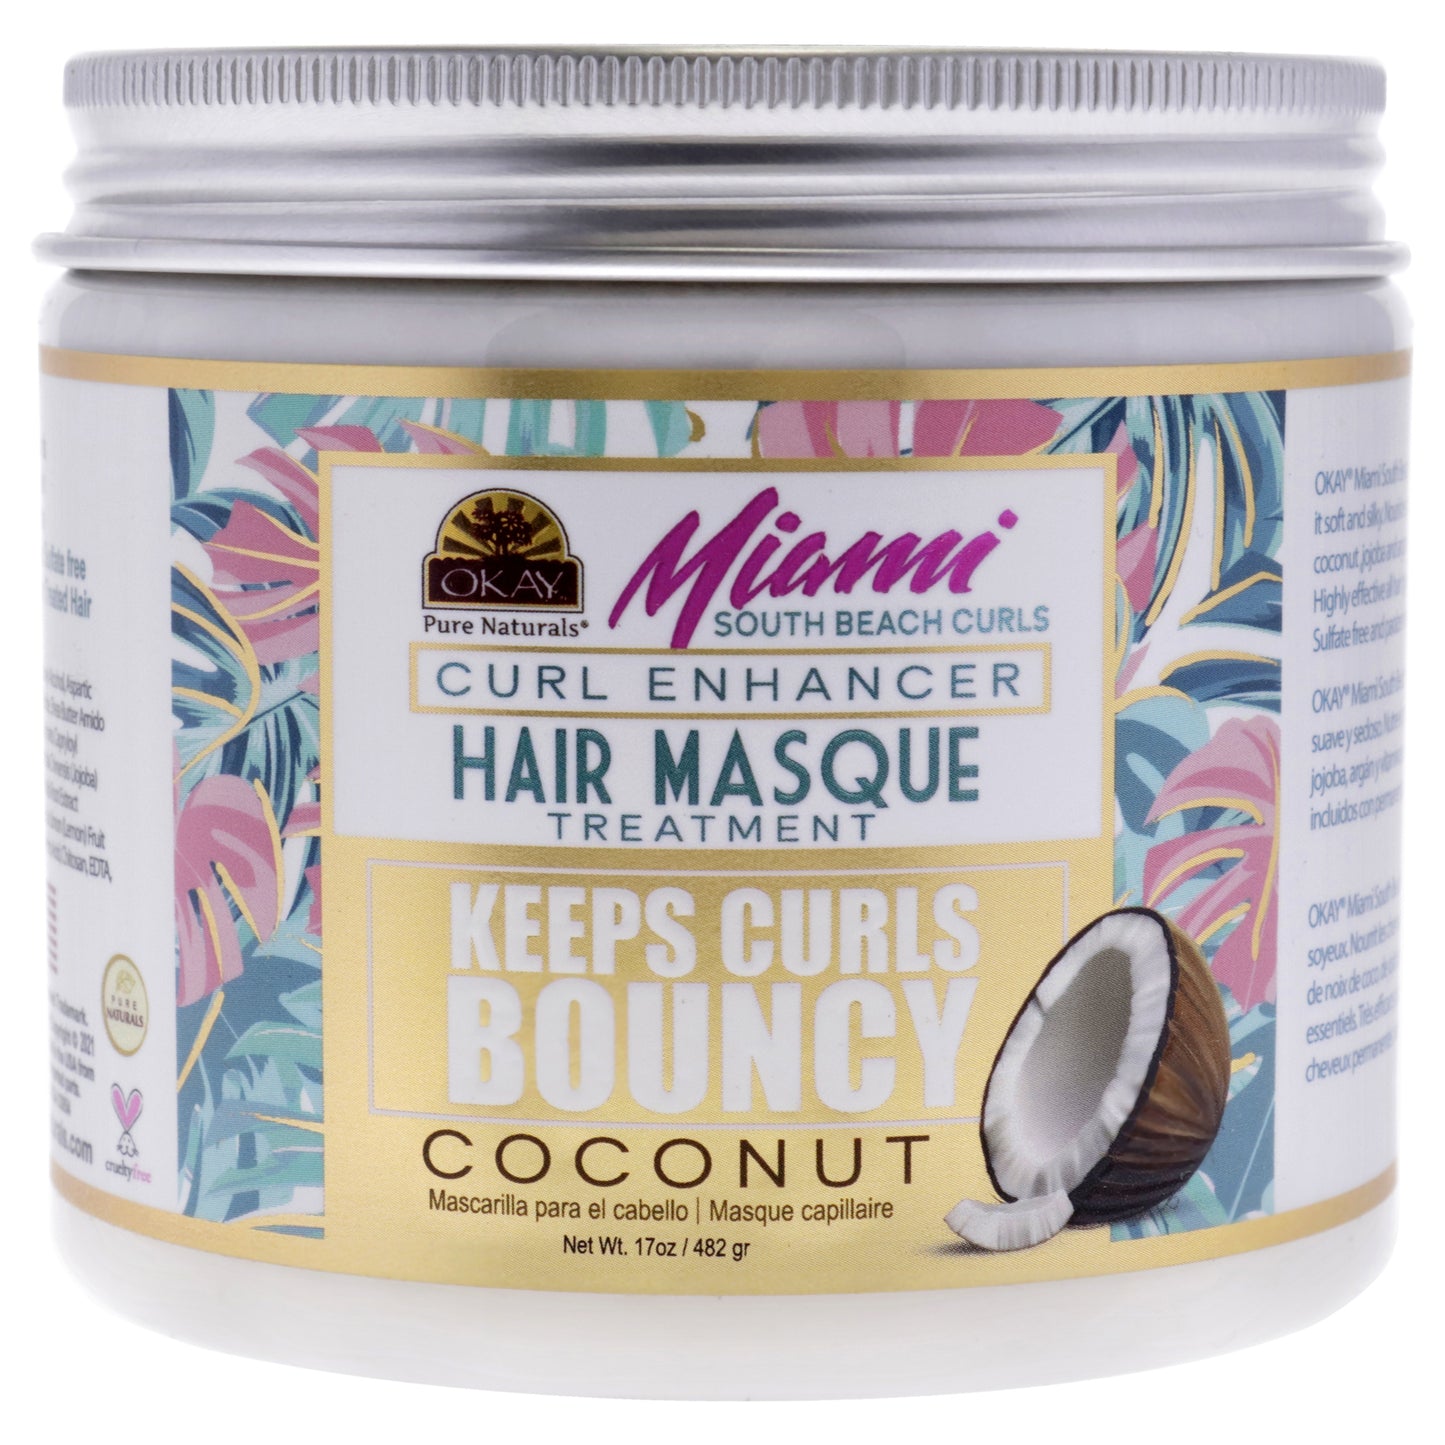 Miami South Beach Curls - Curl Enhancing by Okay for Women - 17 oz Masque